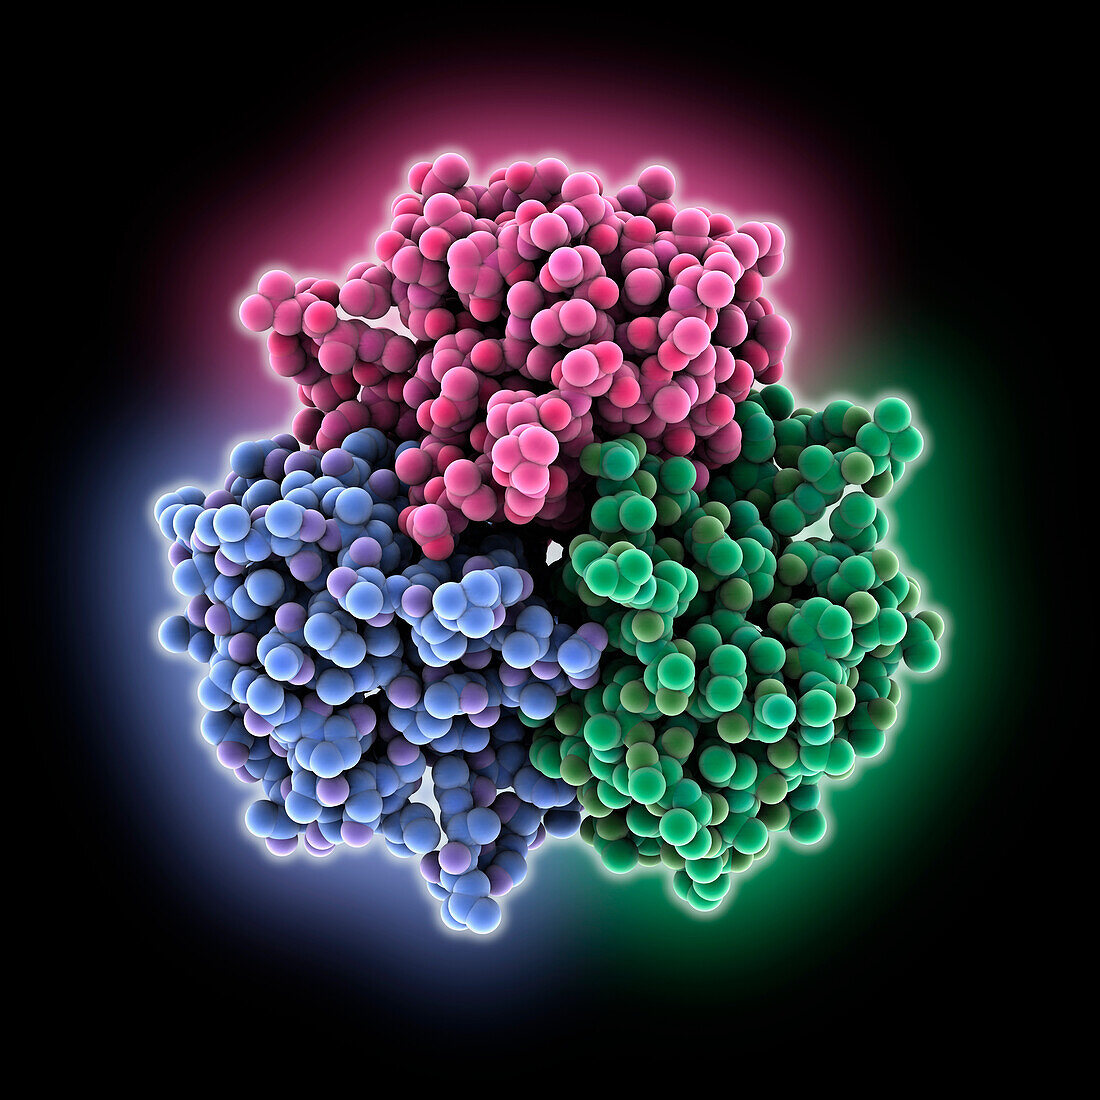 Noumeavirus NMV_189 protein, molecular model